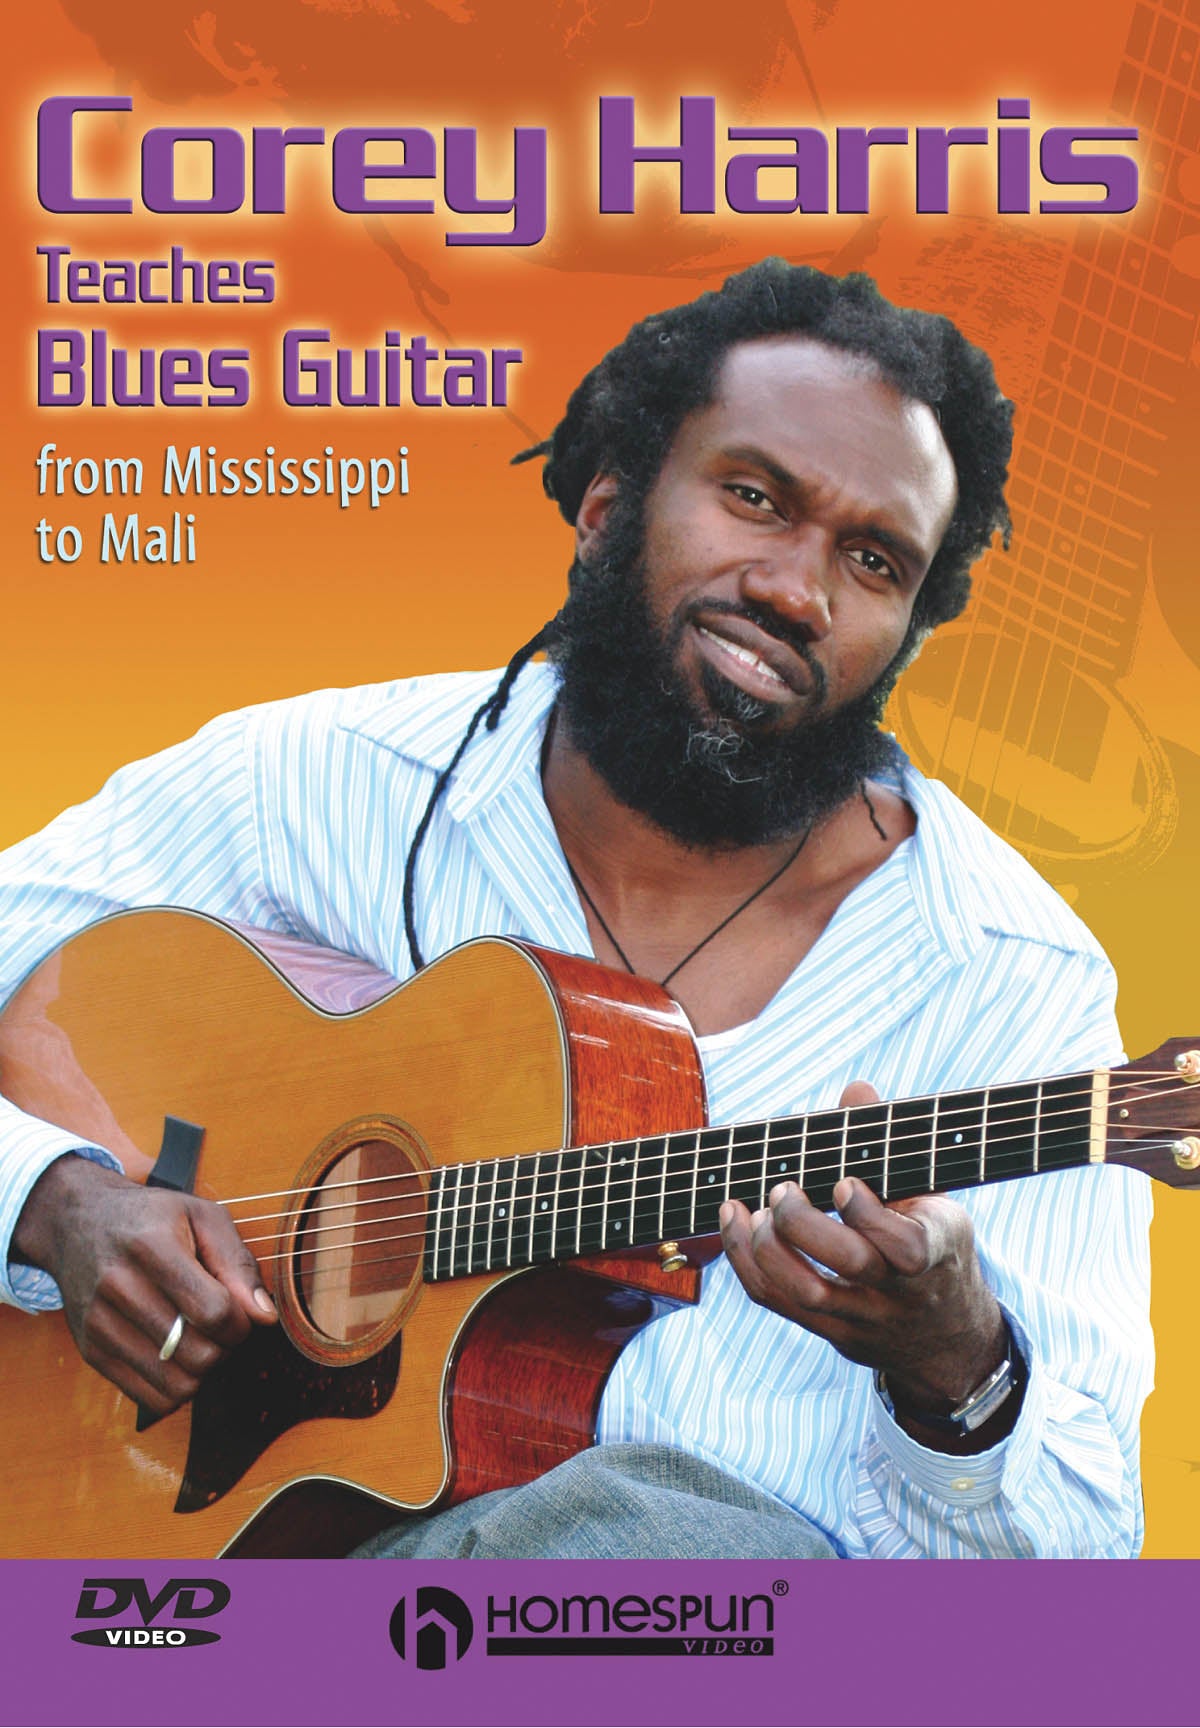 Homespun, DVD - Corey Harris Teaches Blues Guitar - From Mississippi to Mali